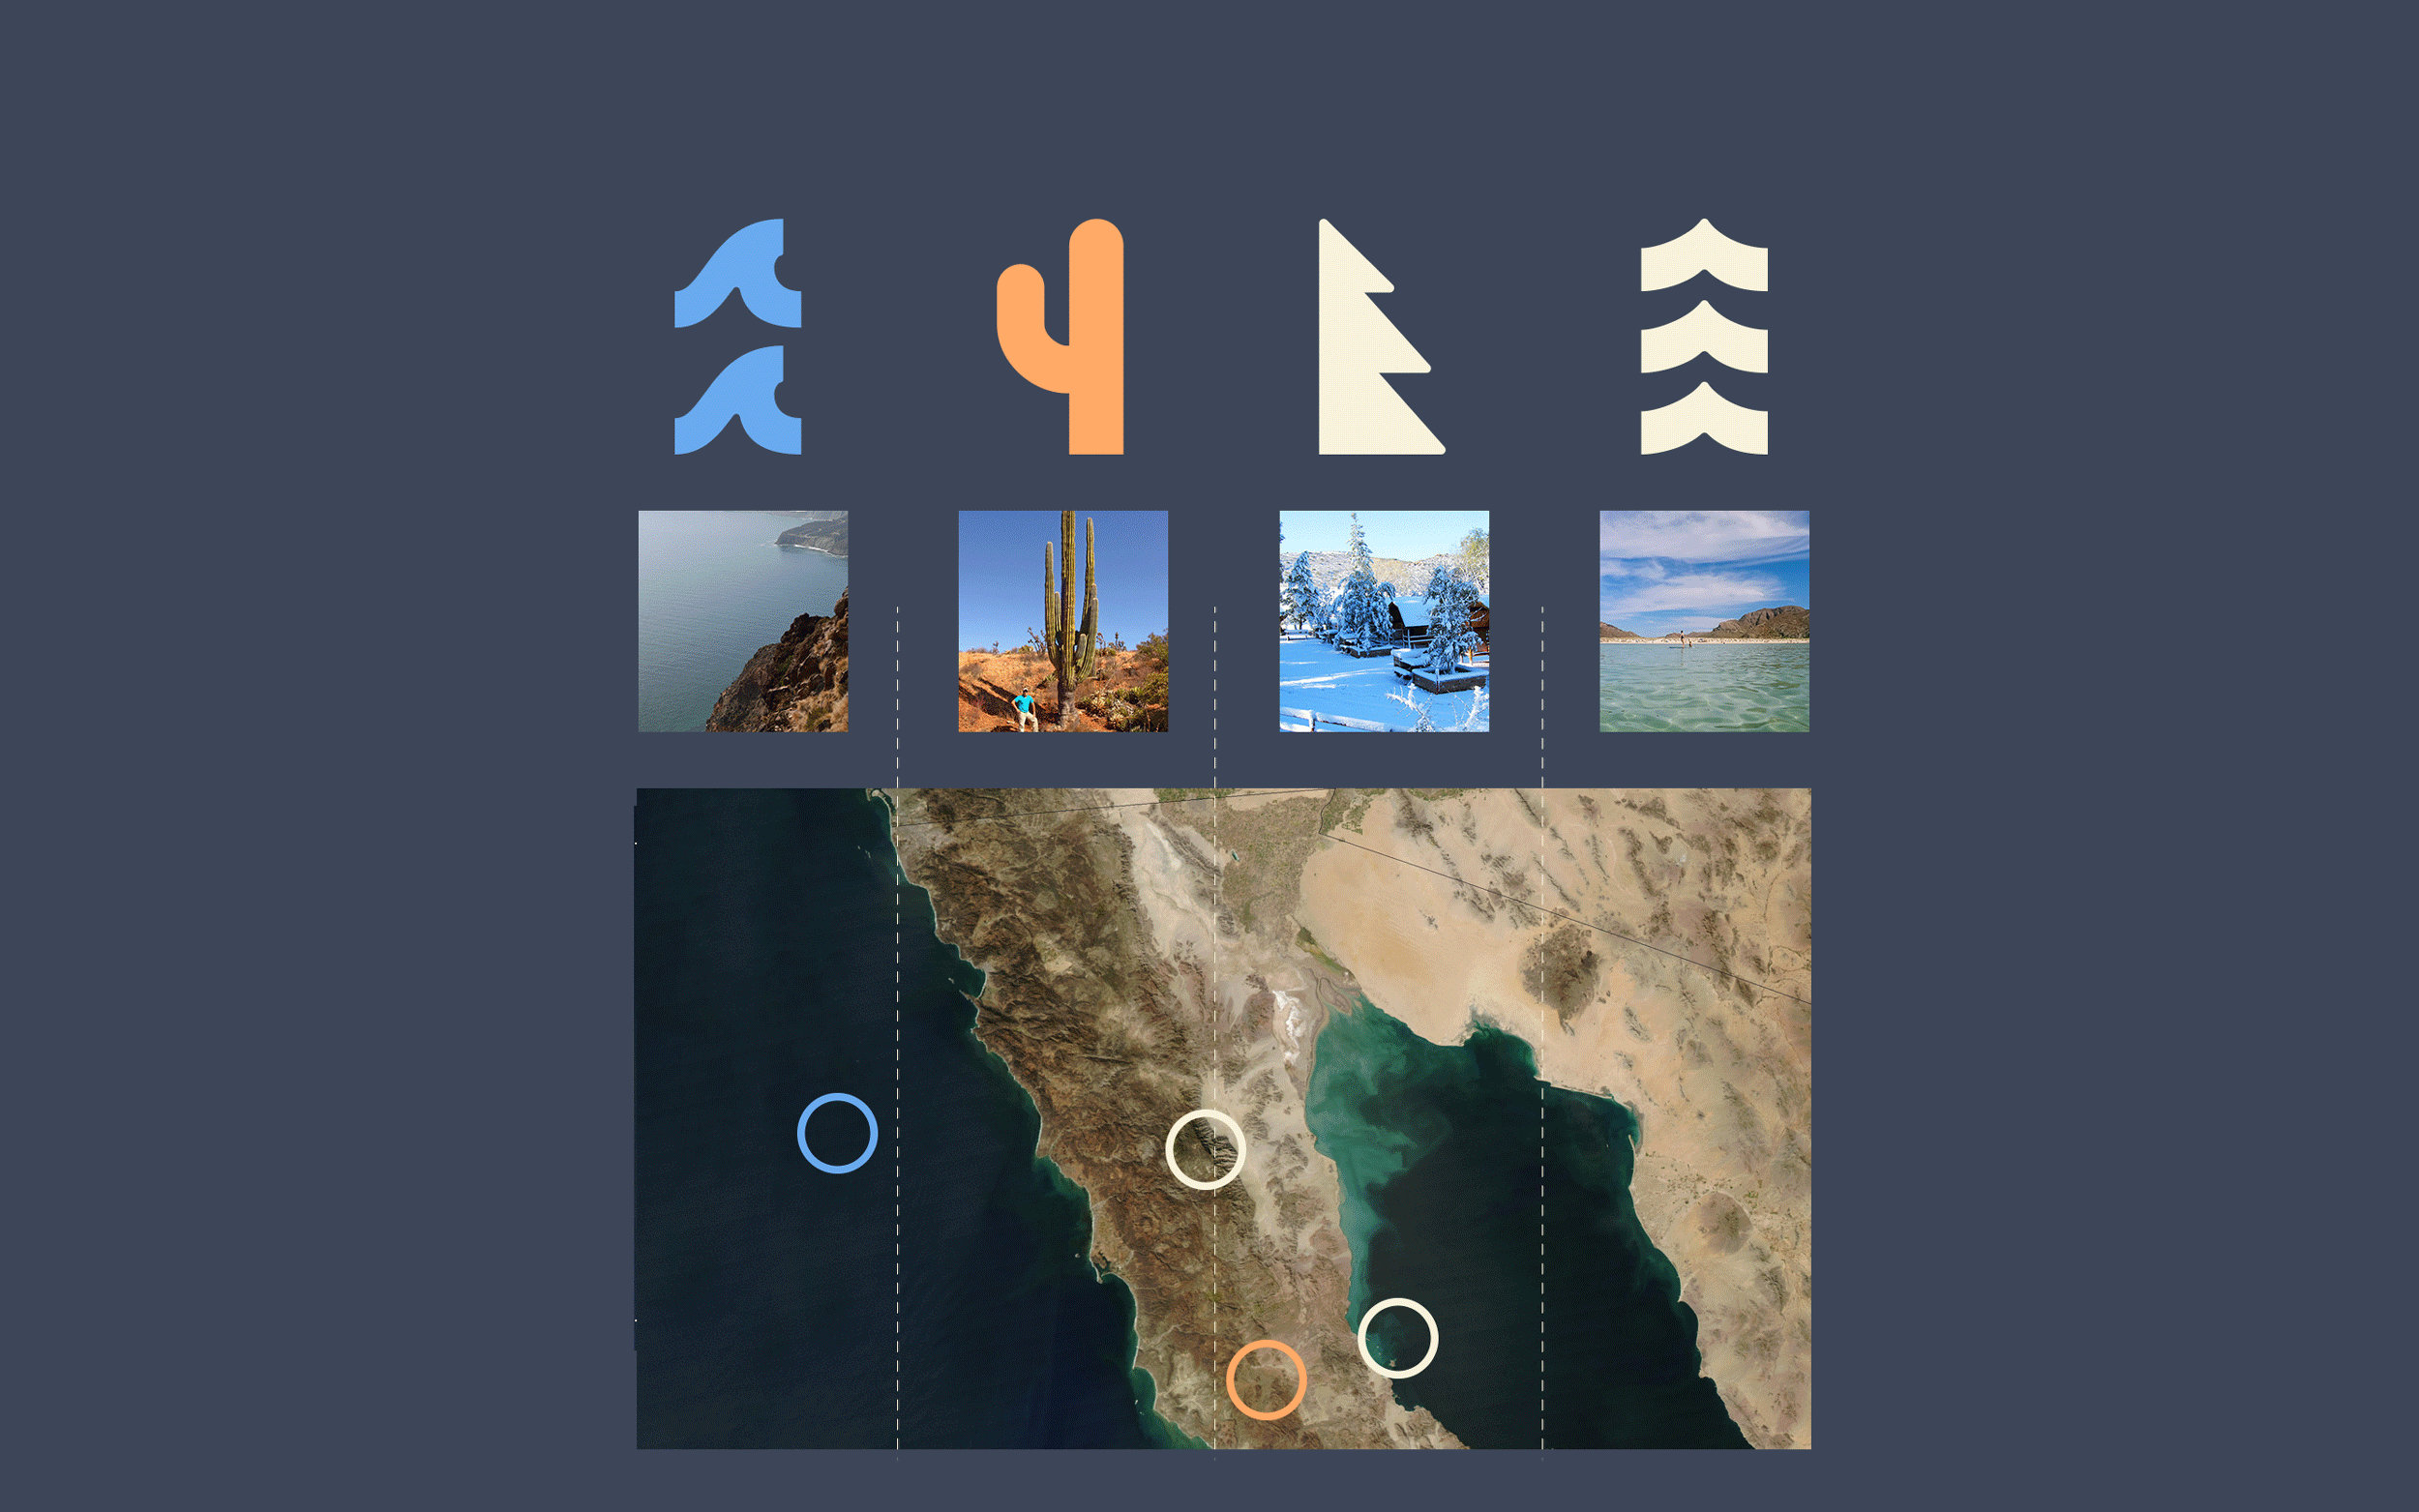 Concept of the creation of the logo of Baja California, Sea, desert, mountains and sea.